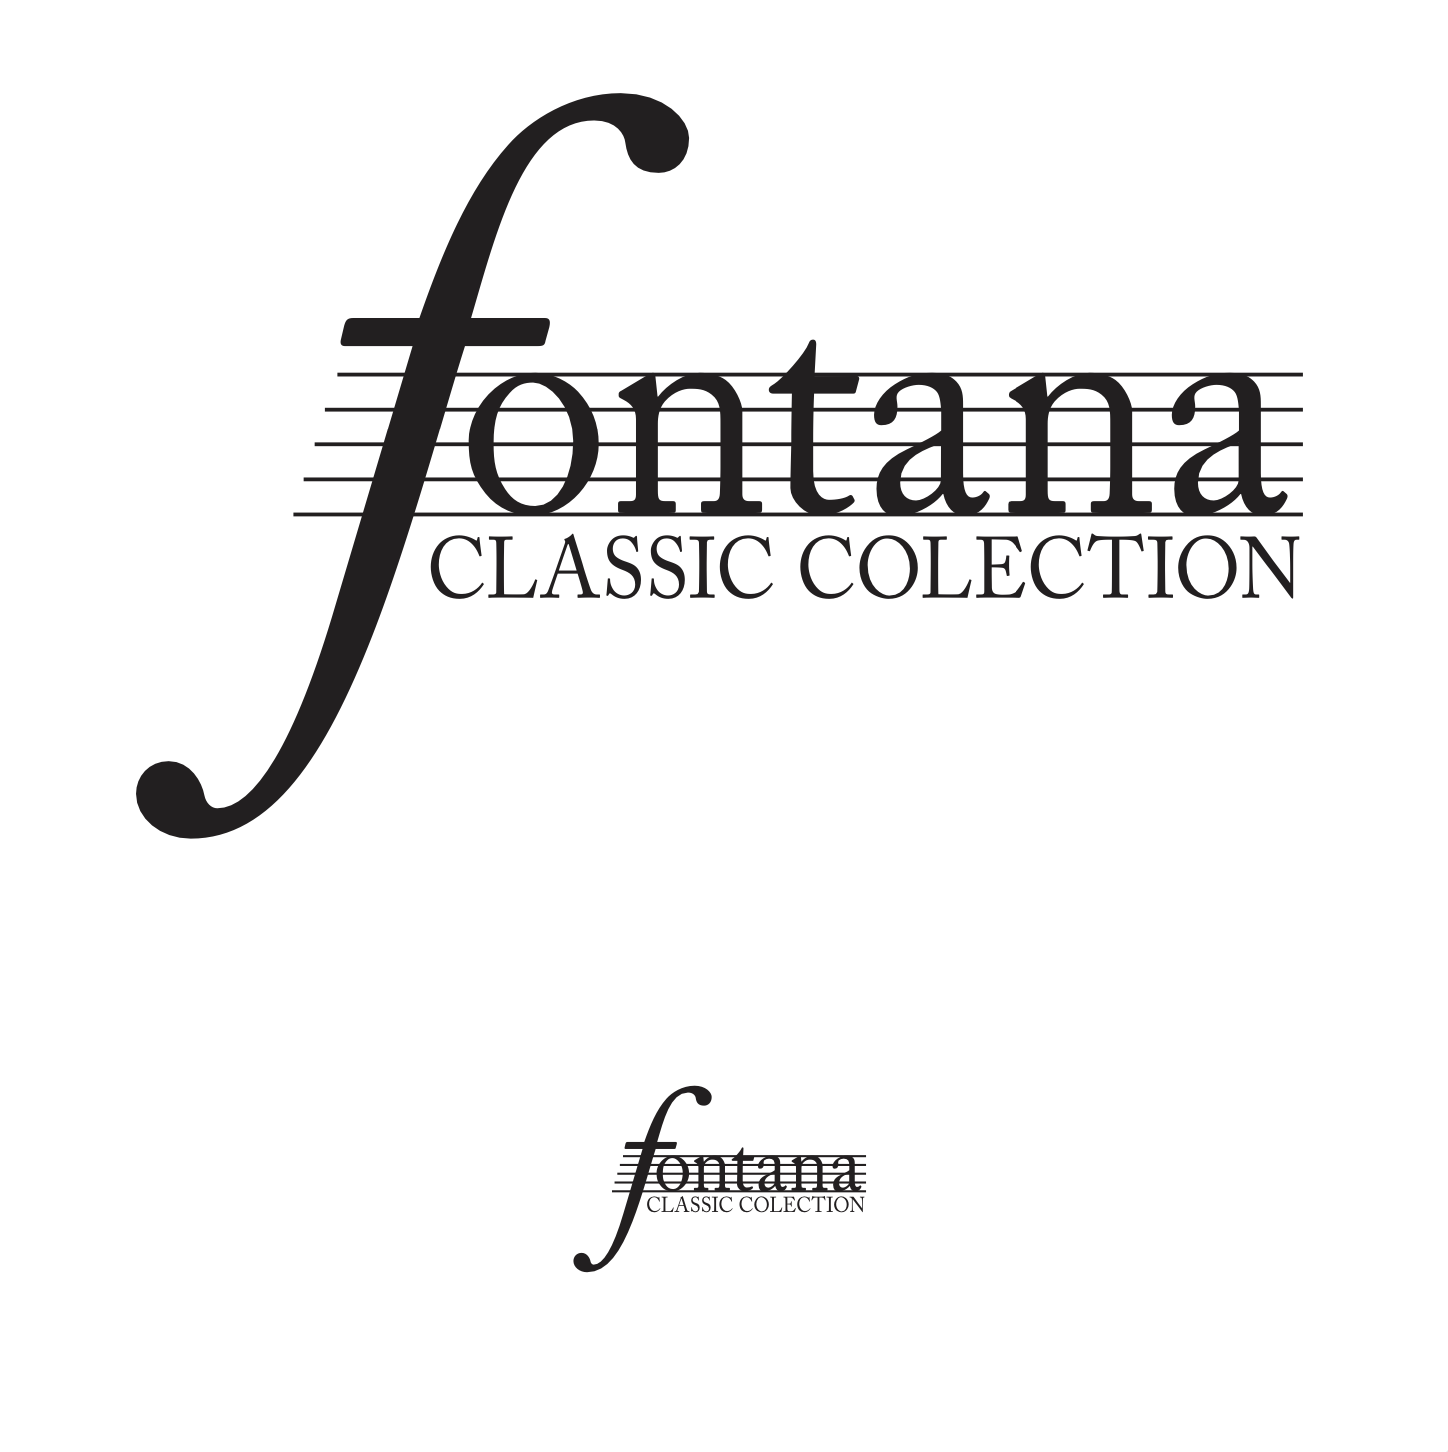 Fontana classic